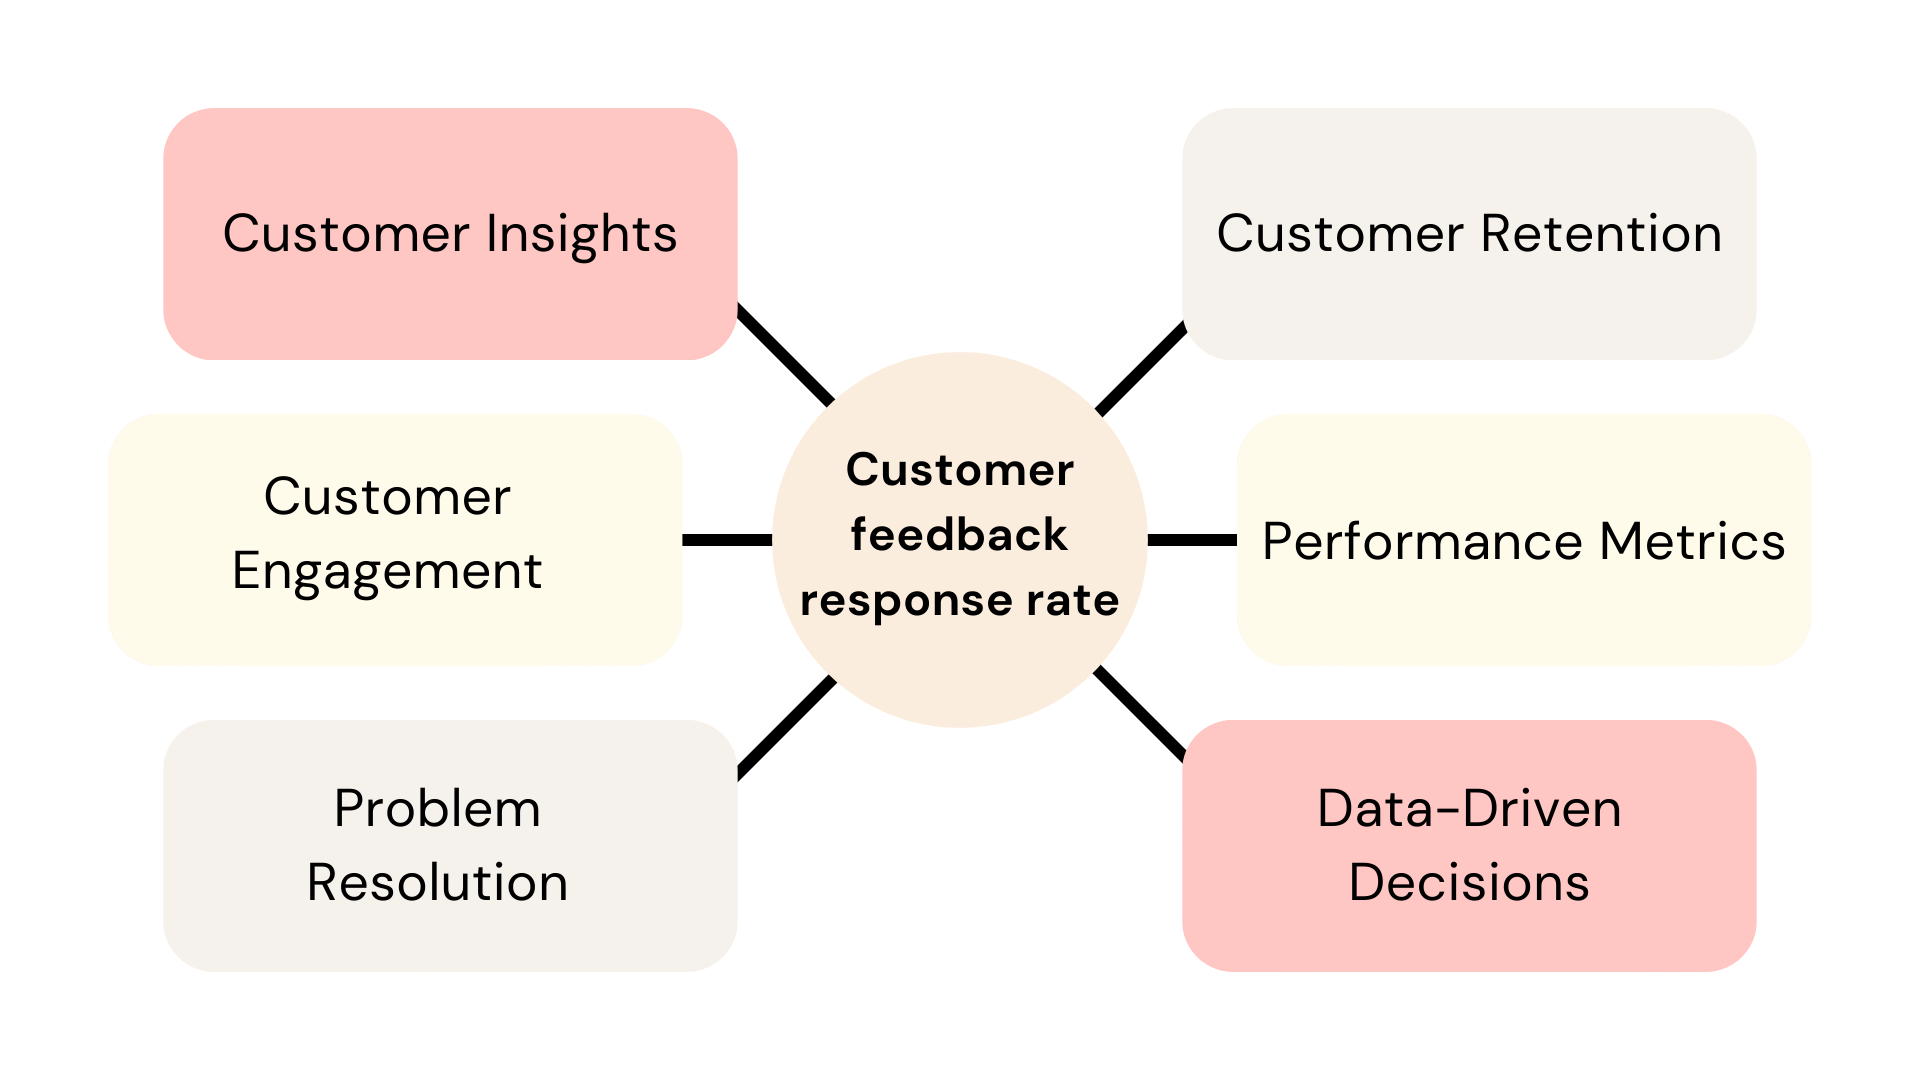 Customer feedback response rate